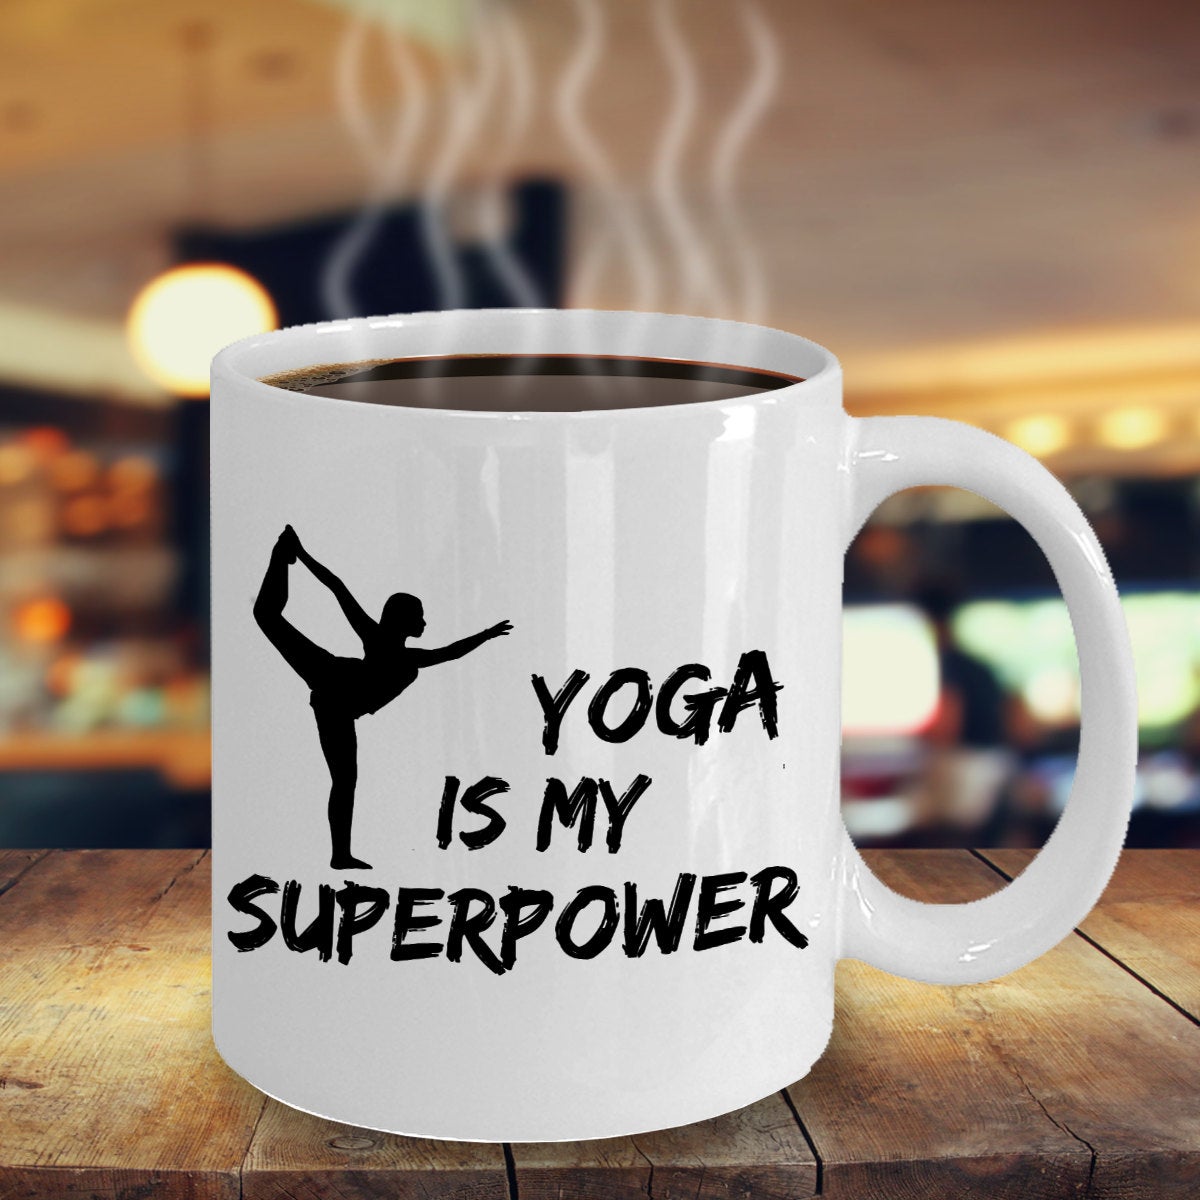 Funny Yoga Mug, This SuperPower Mug Is Perfect Yoga Gift! Give Our